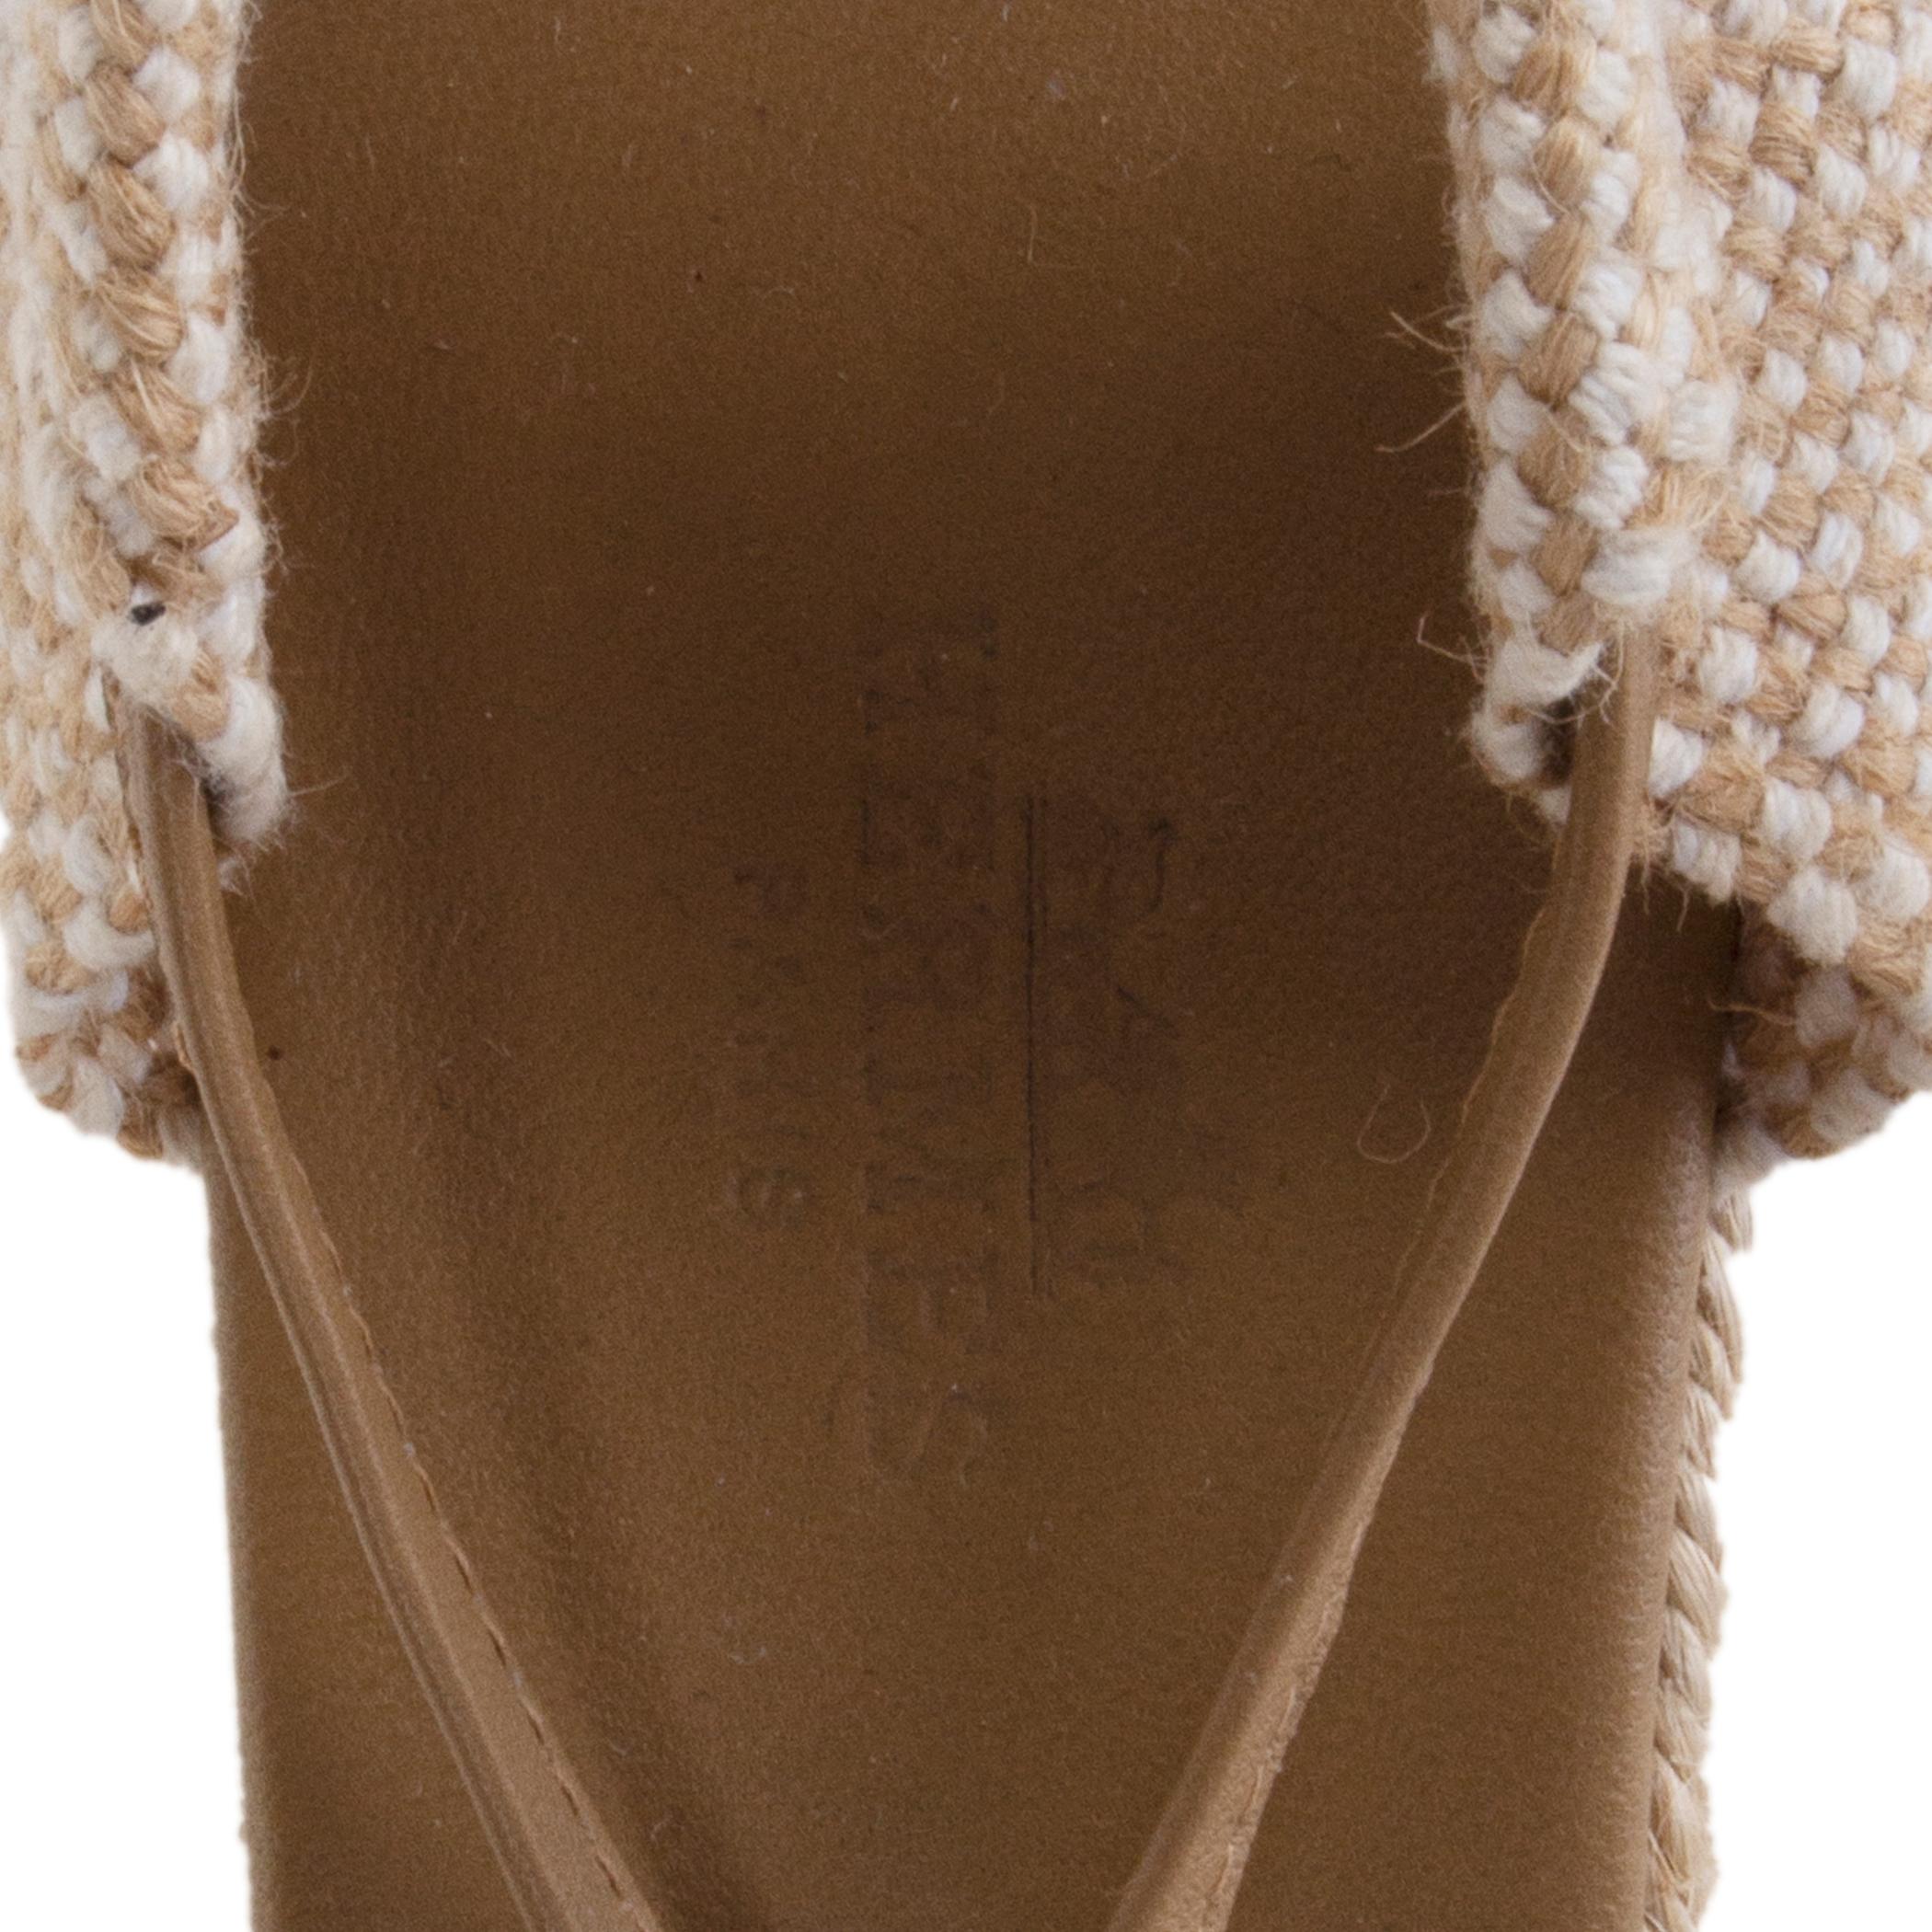 HERMES beige canvas & RAFFIA ESPADRILLE Wedge Sandals Shoes 39 1